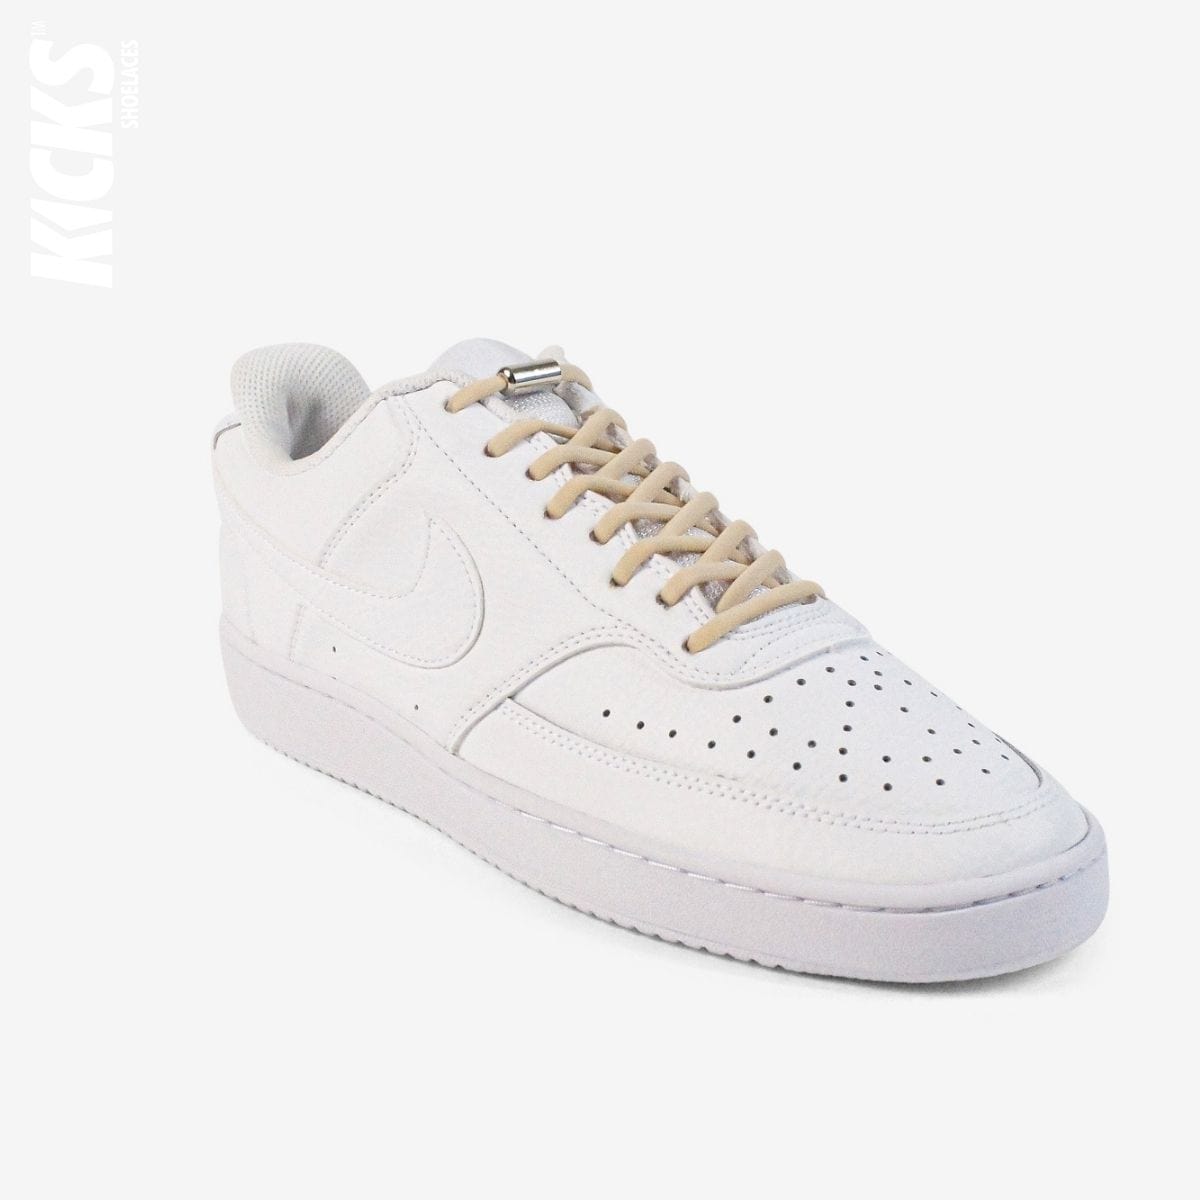 round-no-tie-shoelaces-with-khaki-laces-on-nike-white-sneakers-by-kicks-shoelaces